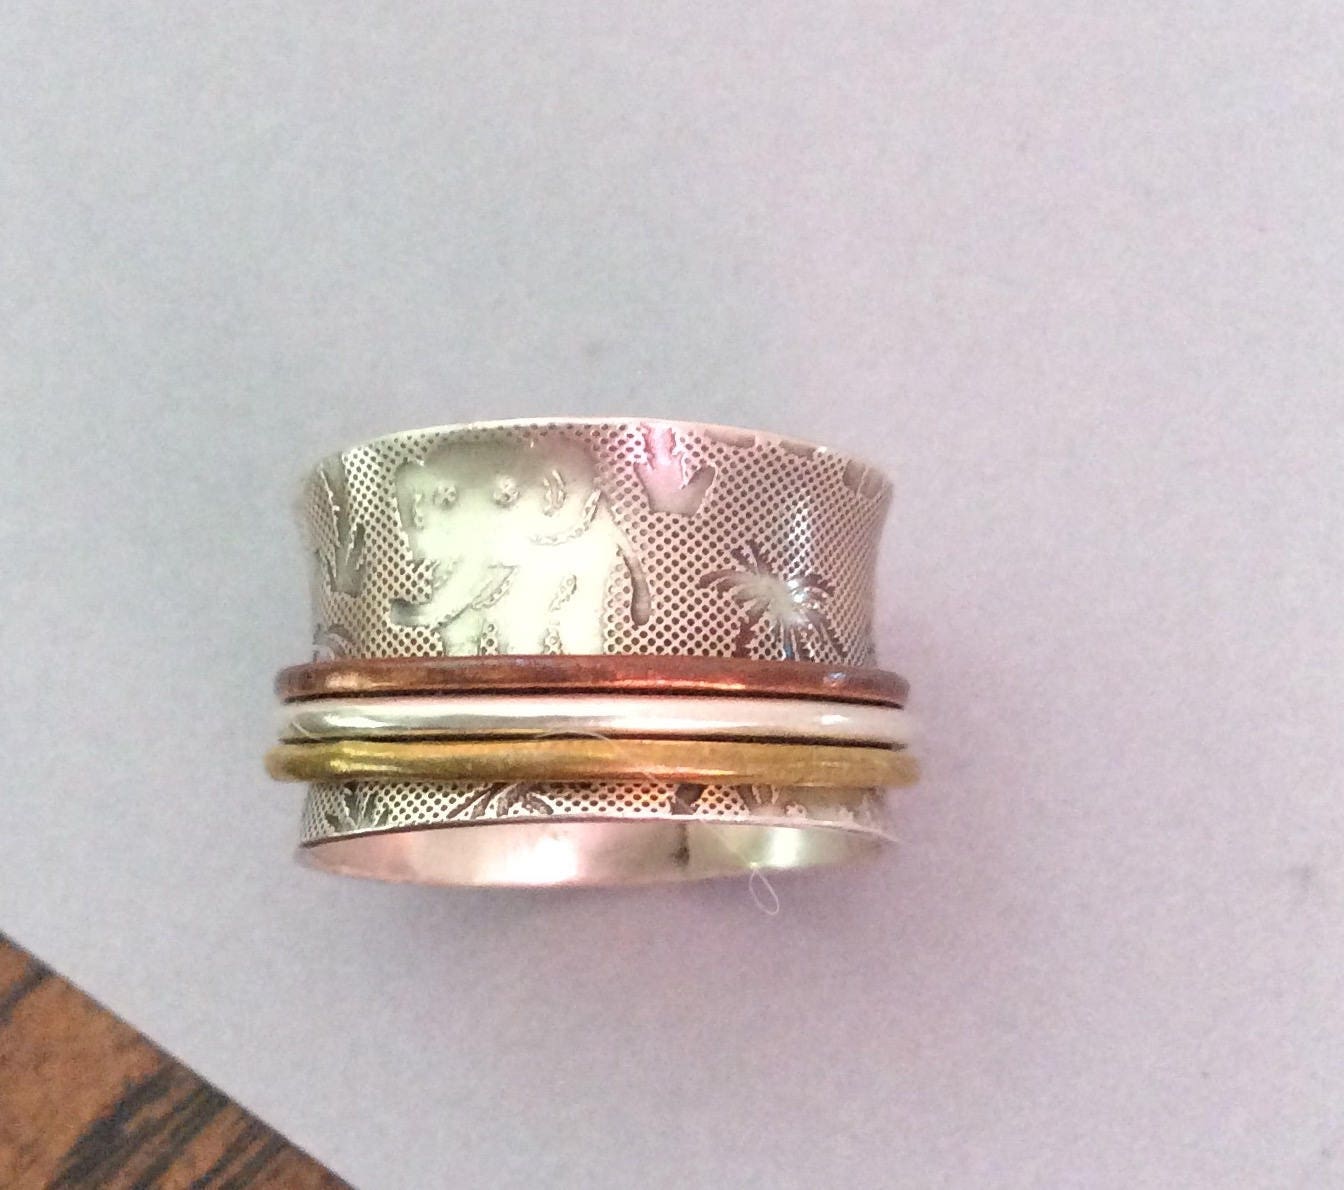 Copper Spinner Bracelet with Sterling Silver